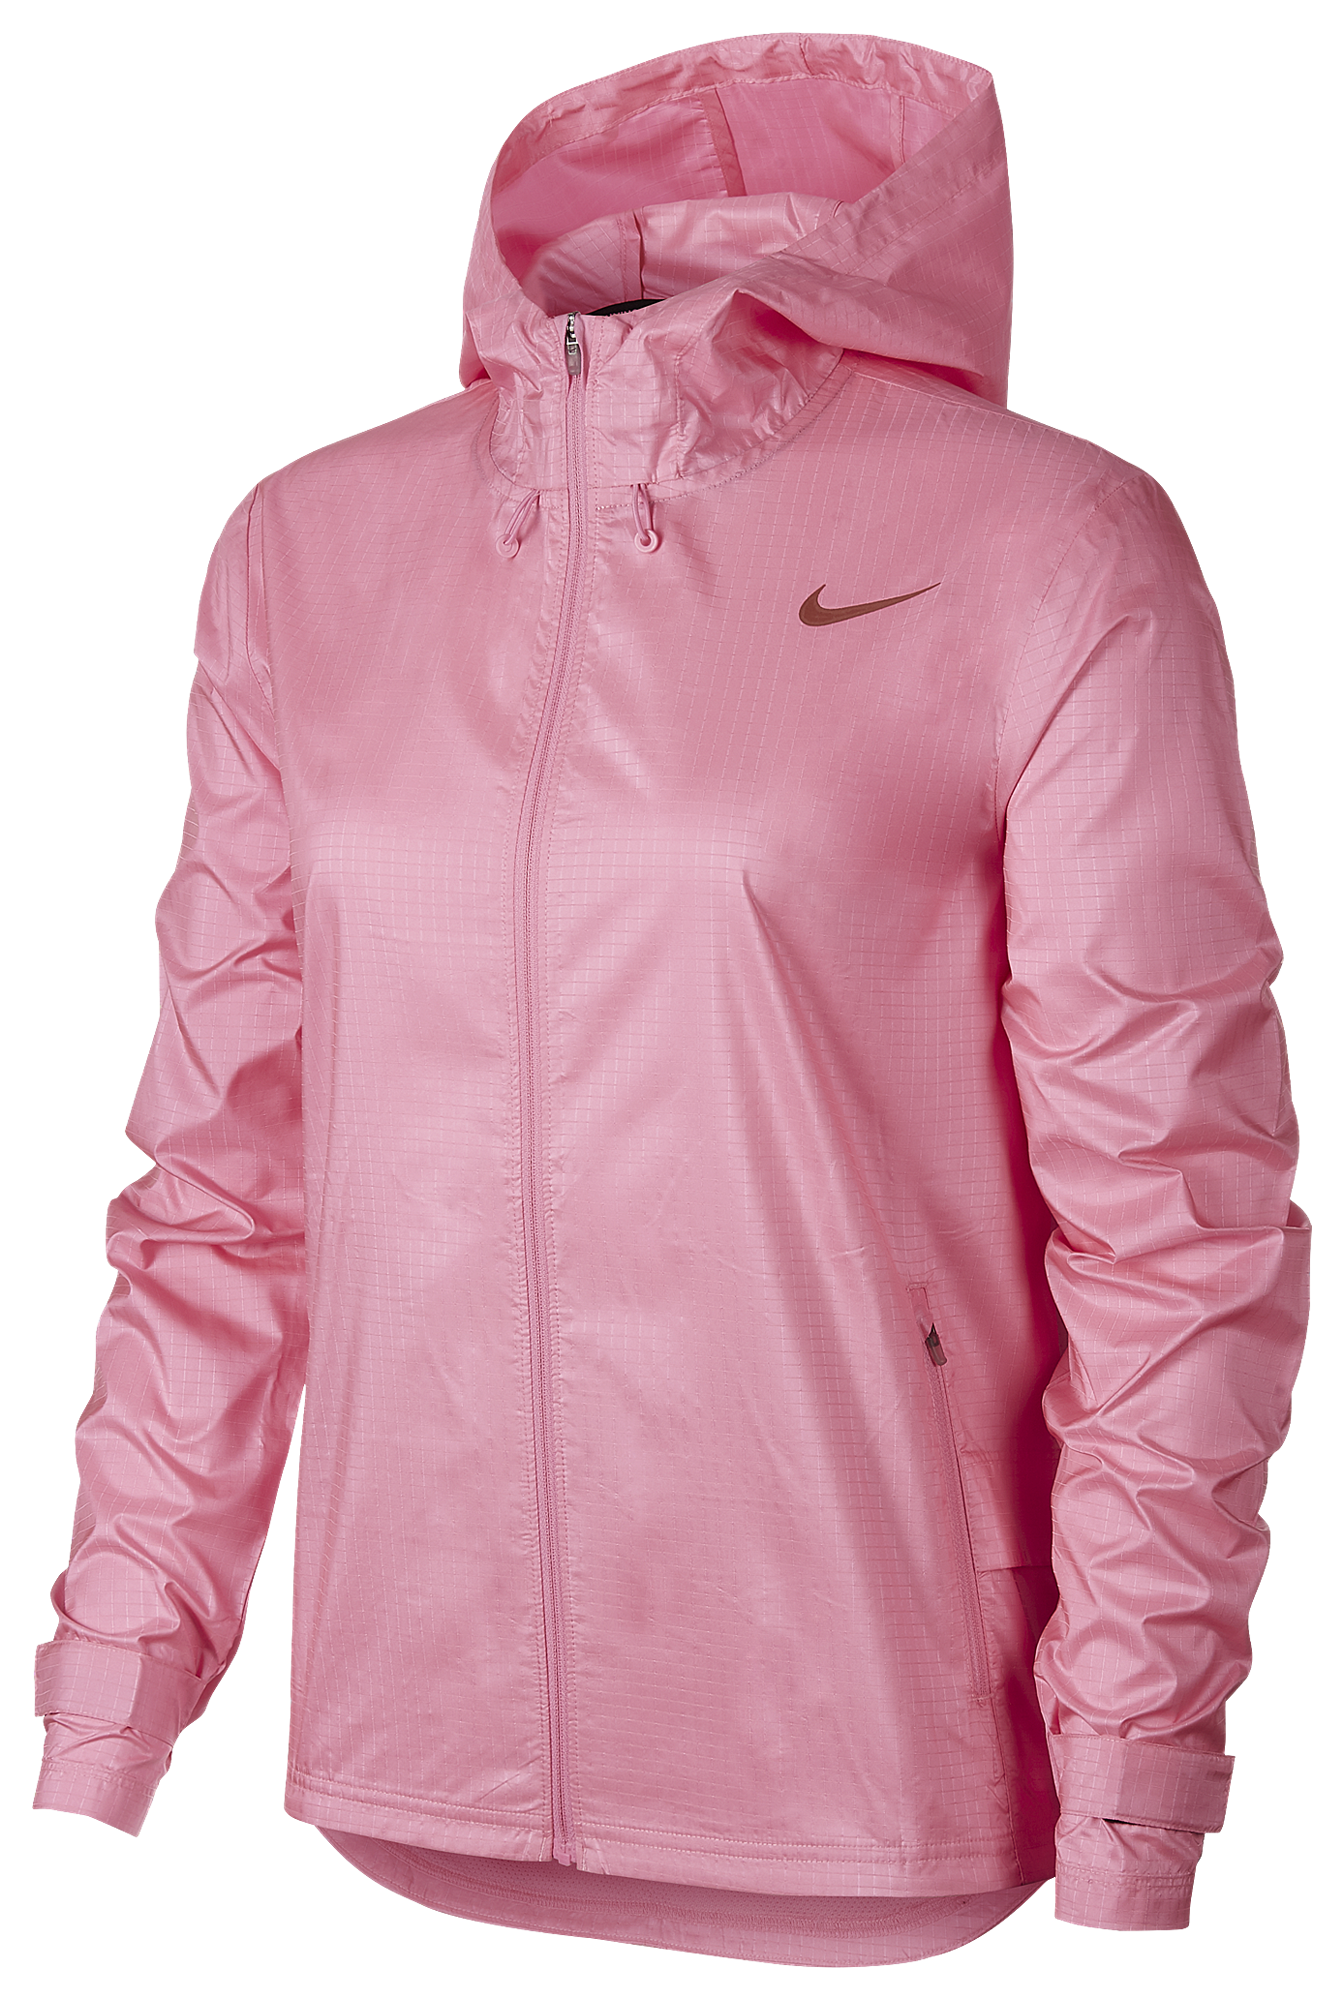 light pink nike jacket